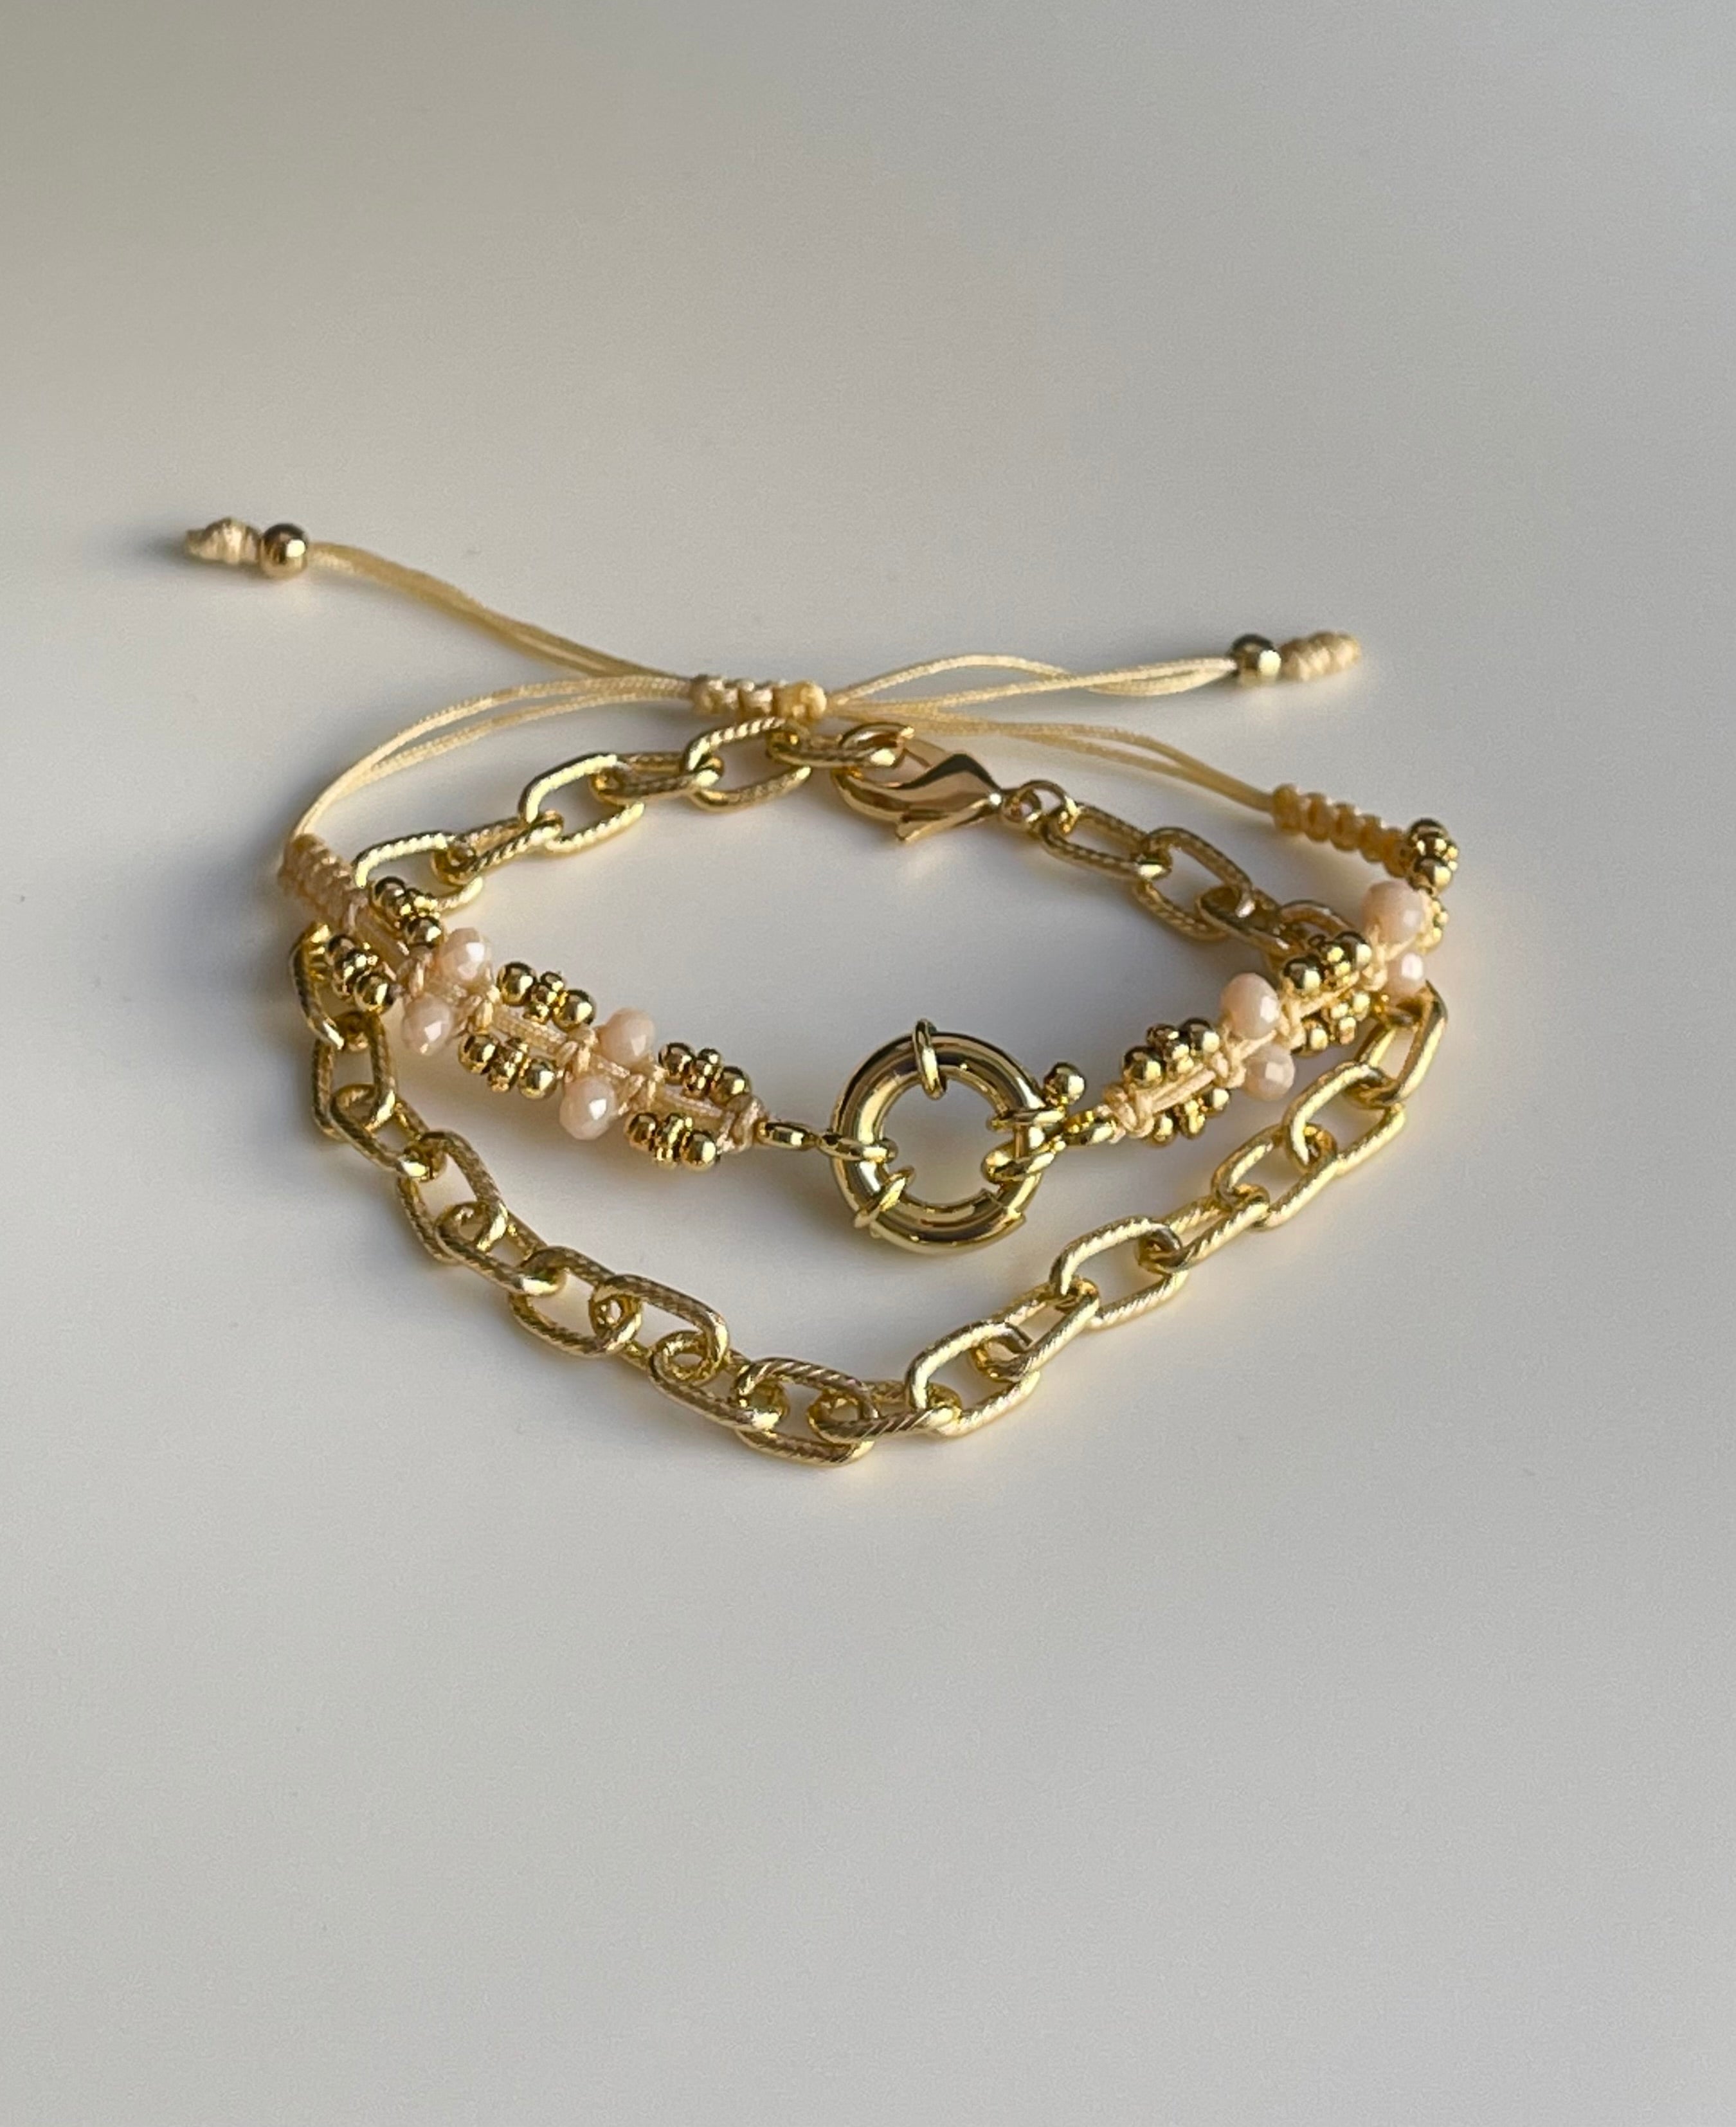 Macrame and Goldfilled Bracelet